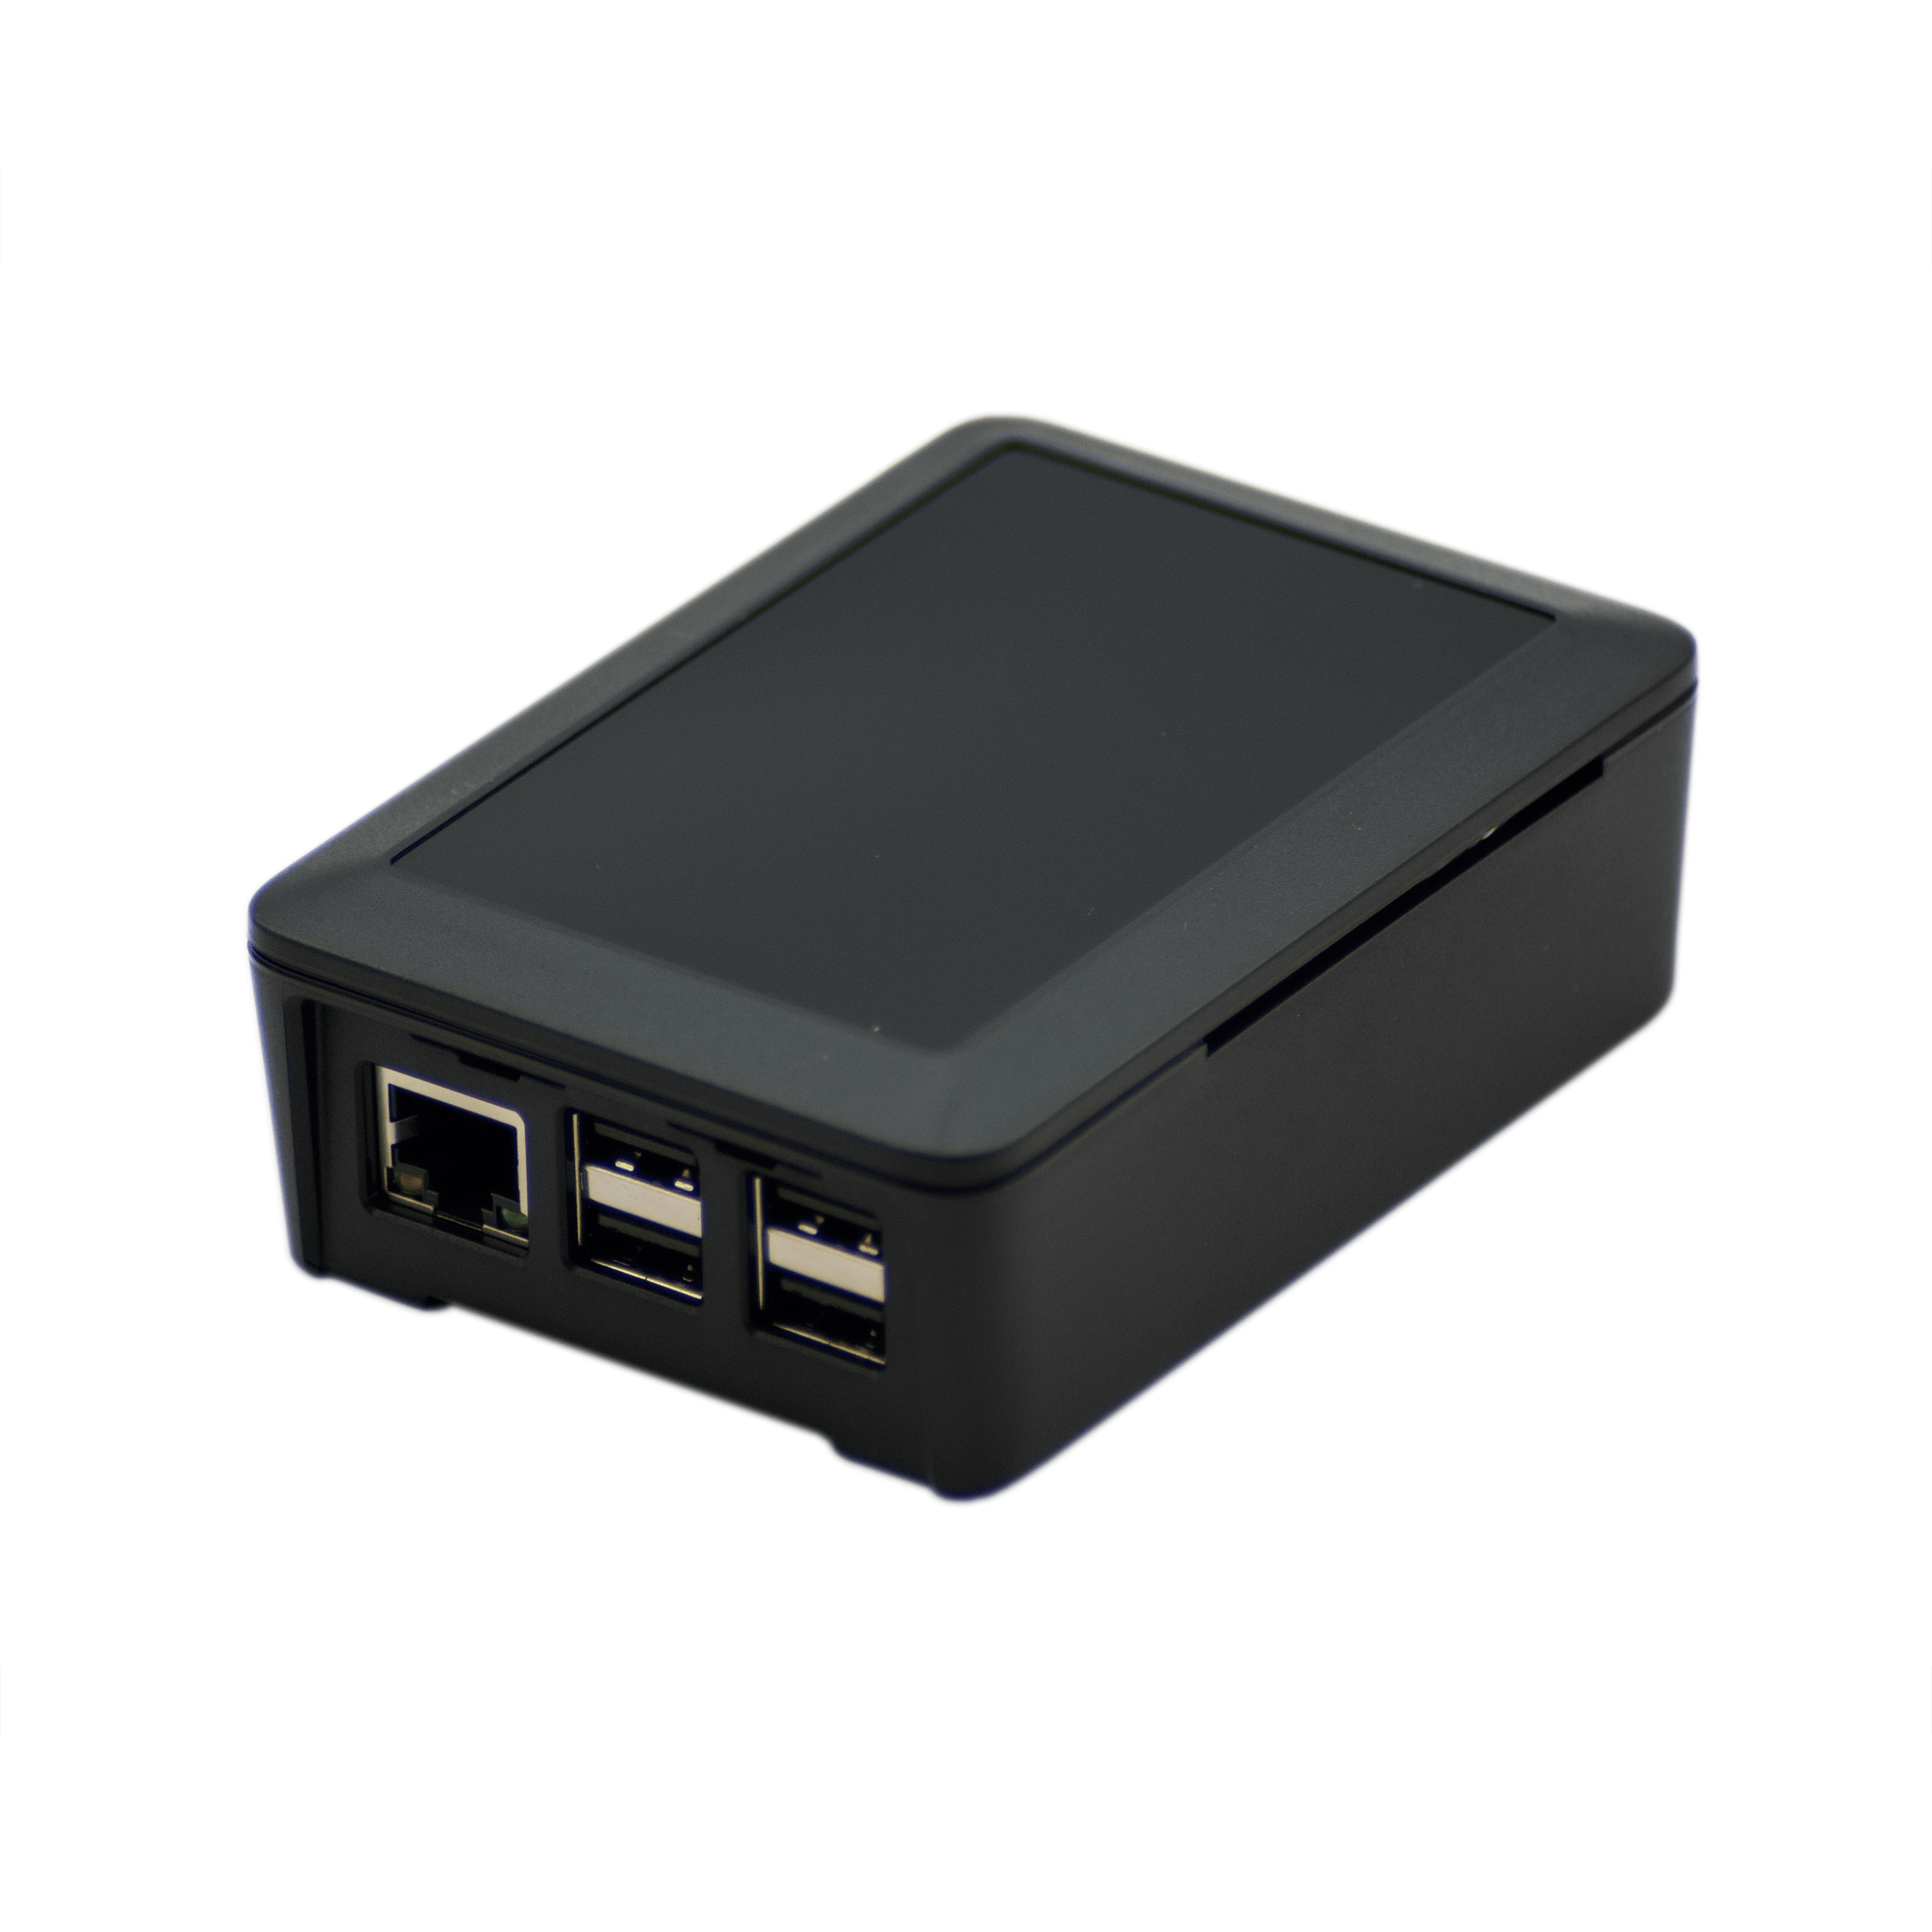 Modular Raspberry Pi 3 Case - Black - The Pi Hut